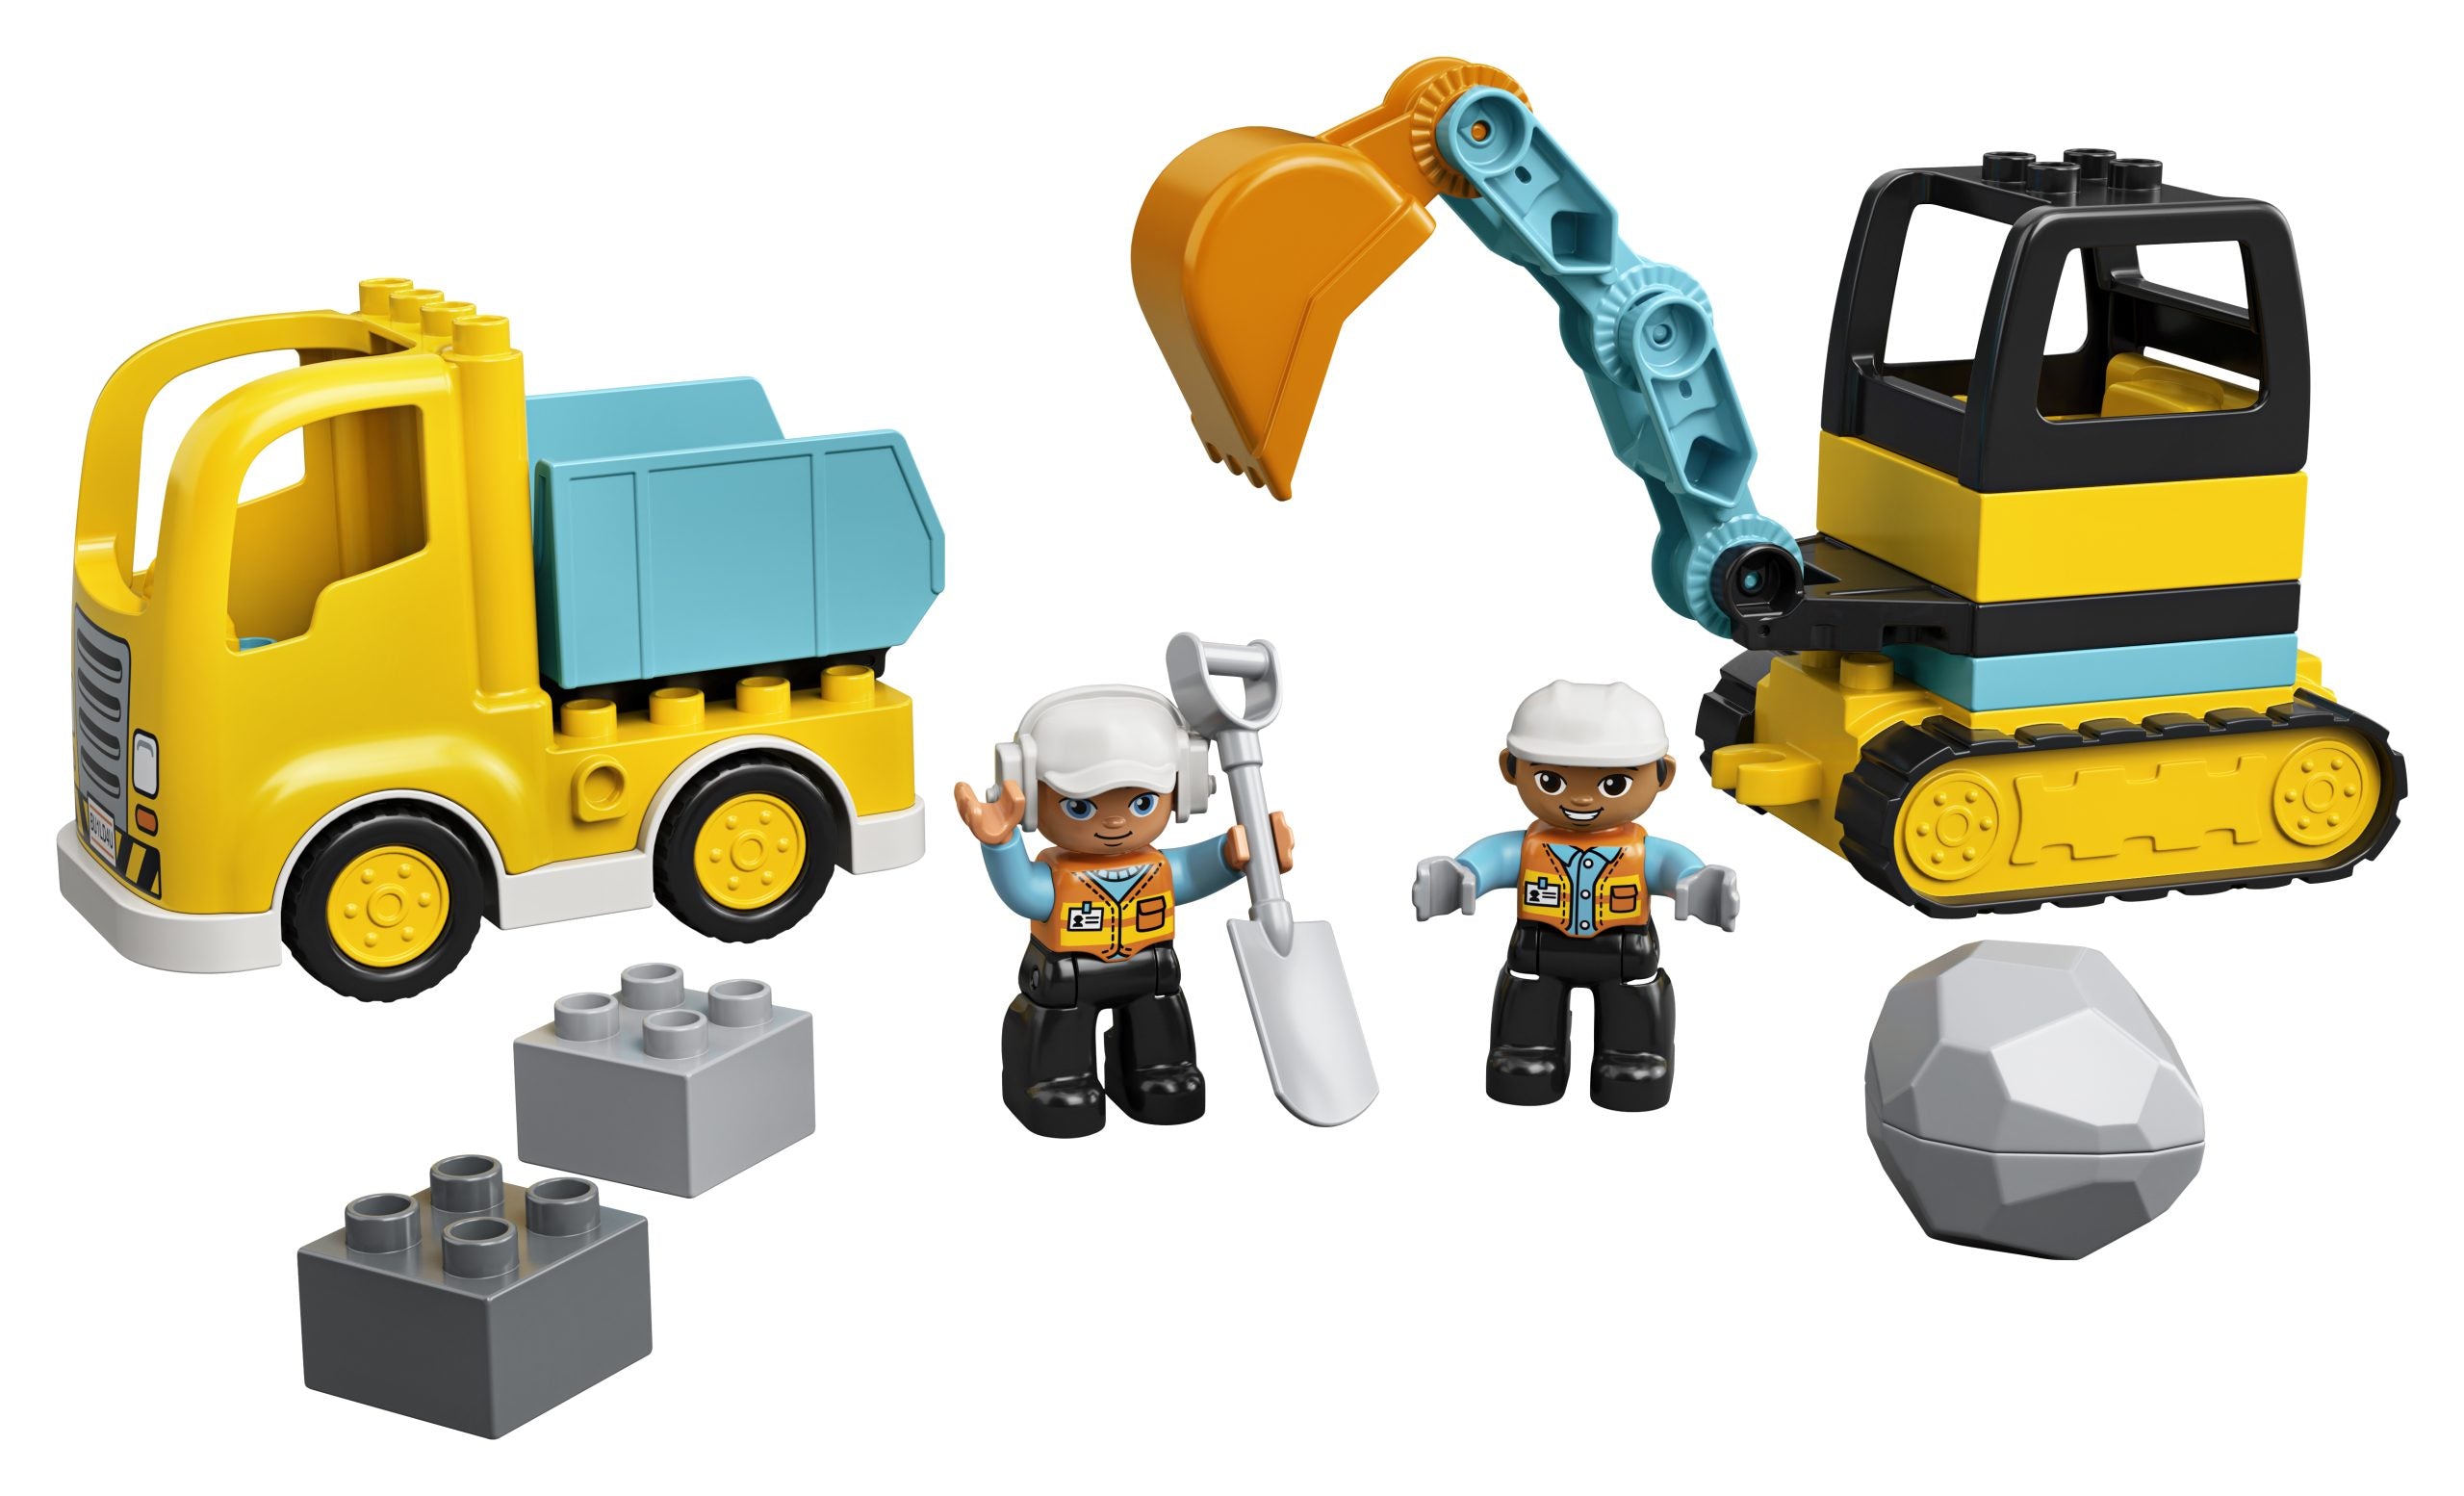 10931 LEGO® Duplo - Camion e scavatrice cingolata